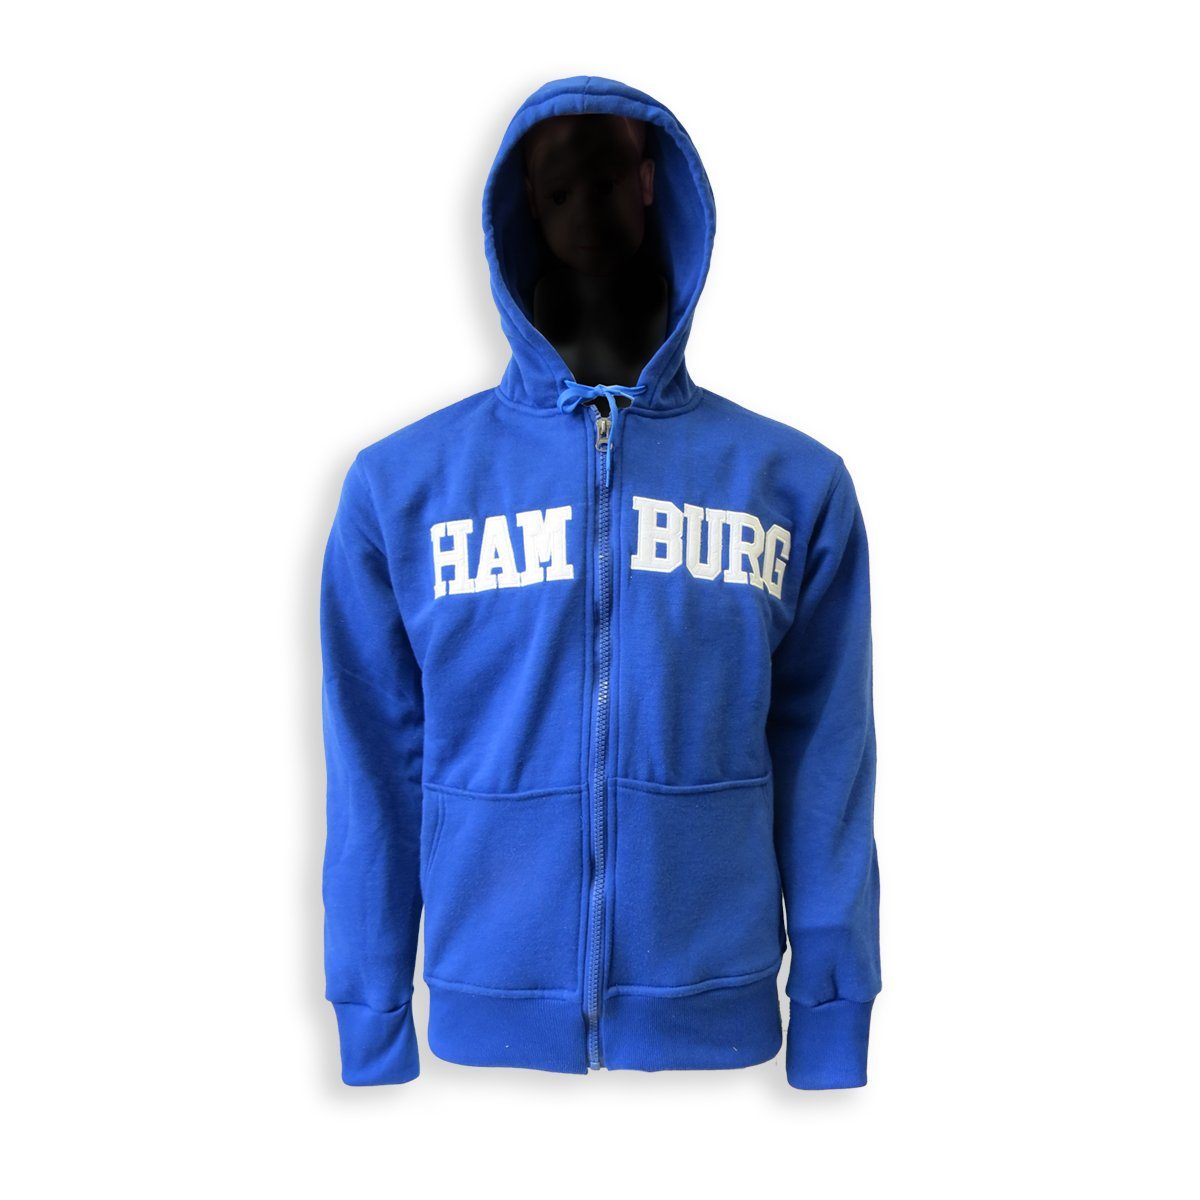 Sonia Originelli T-Shirt Sweatjacke "Hamburg" Herren unifarben Jacke Hoodie bestickt blau